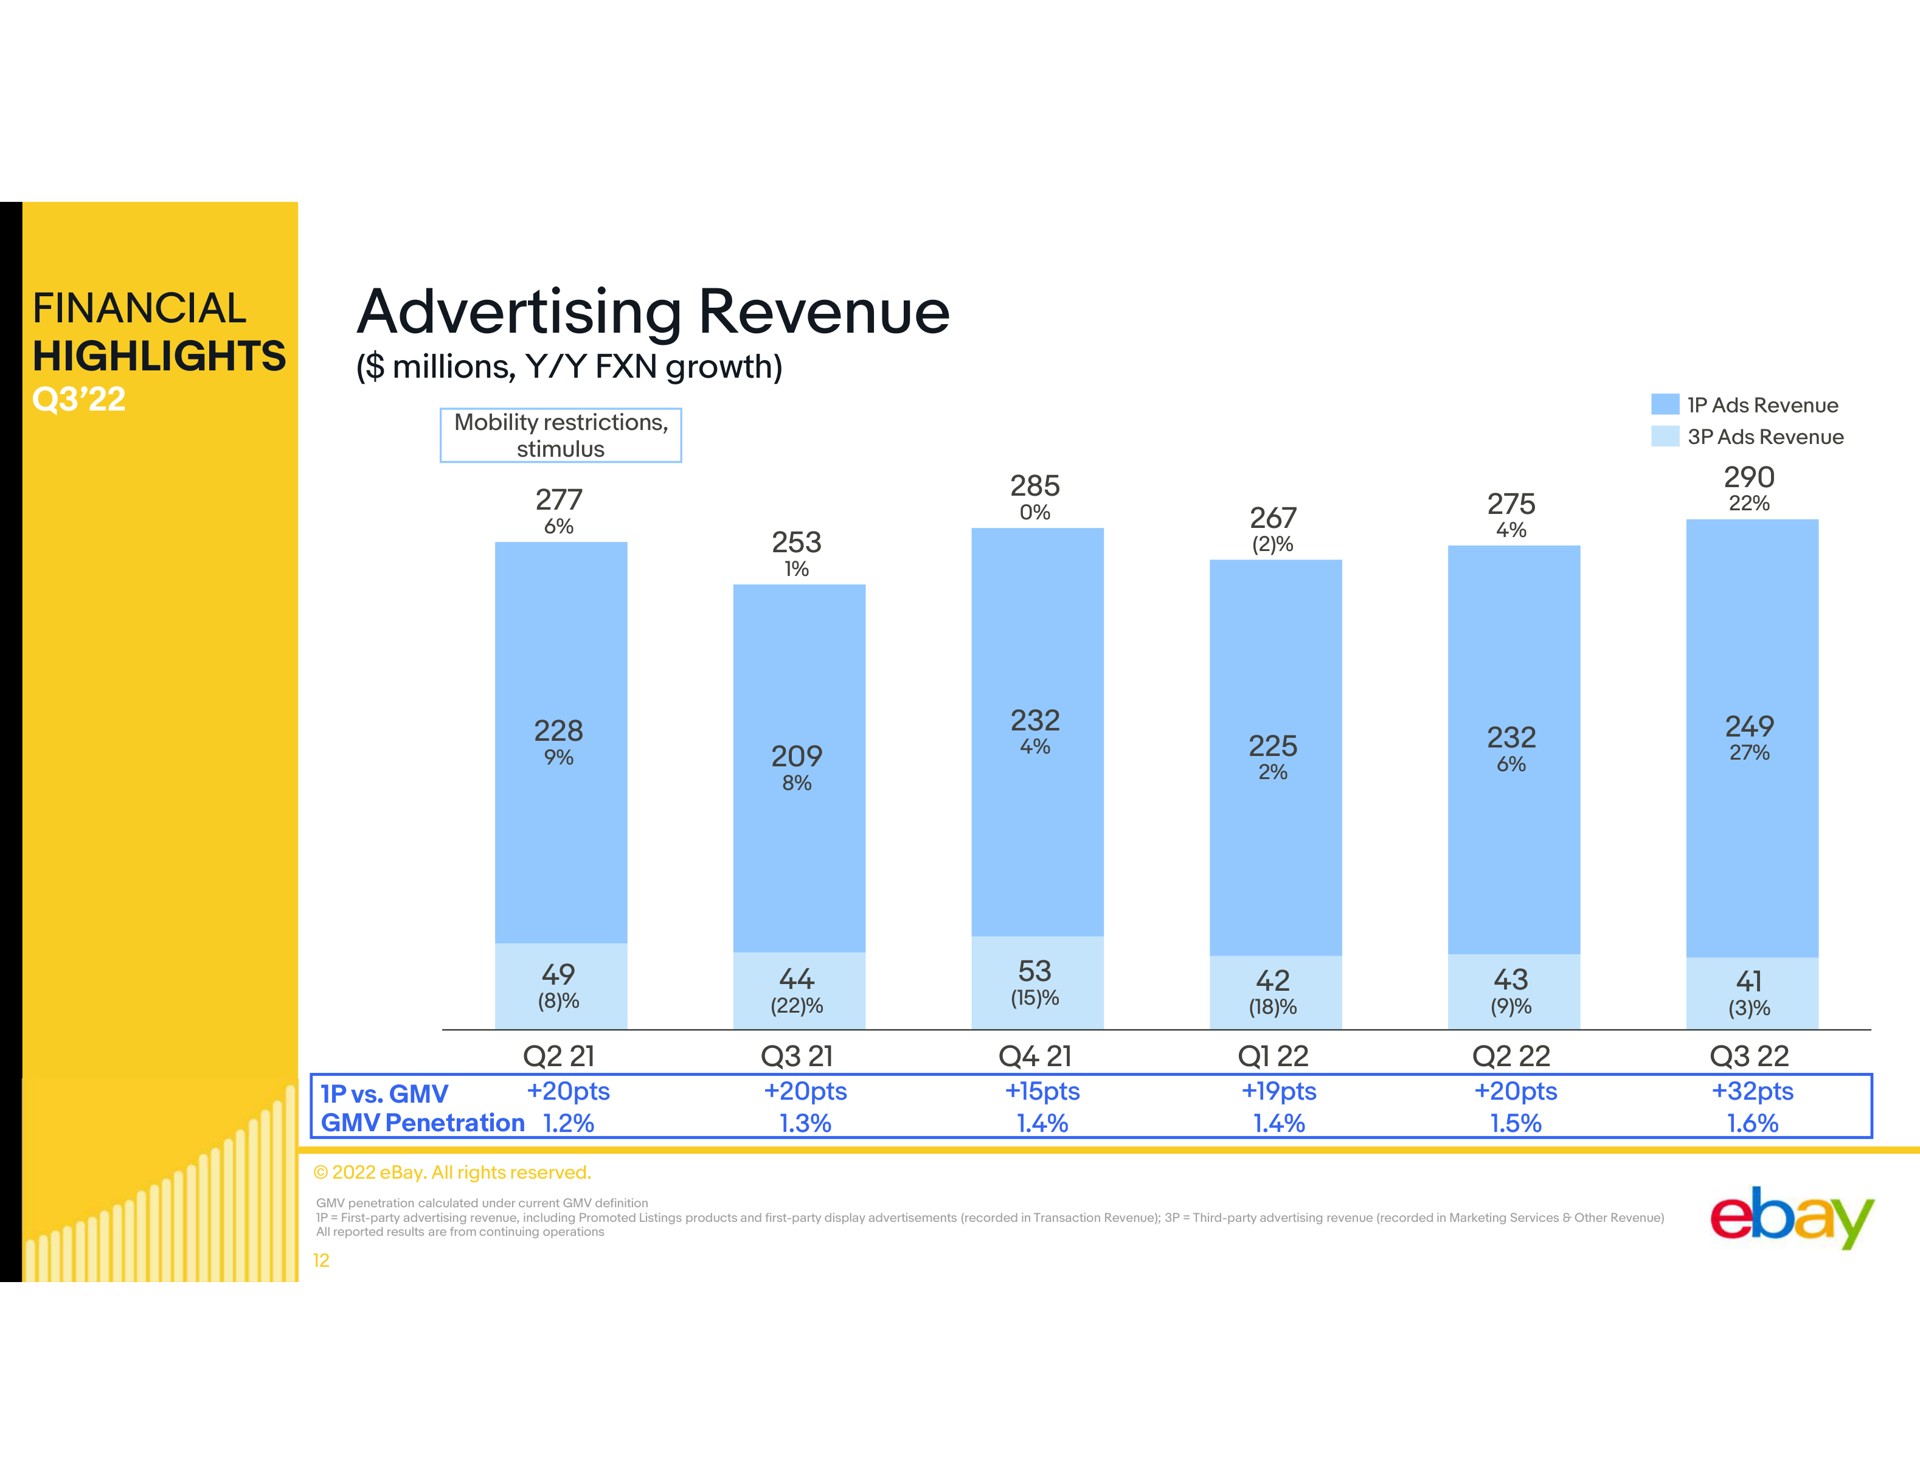 financial highlights advertising revenue ais | eBay